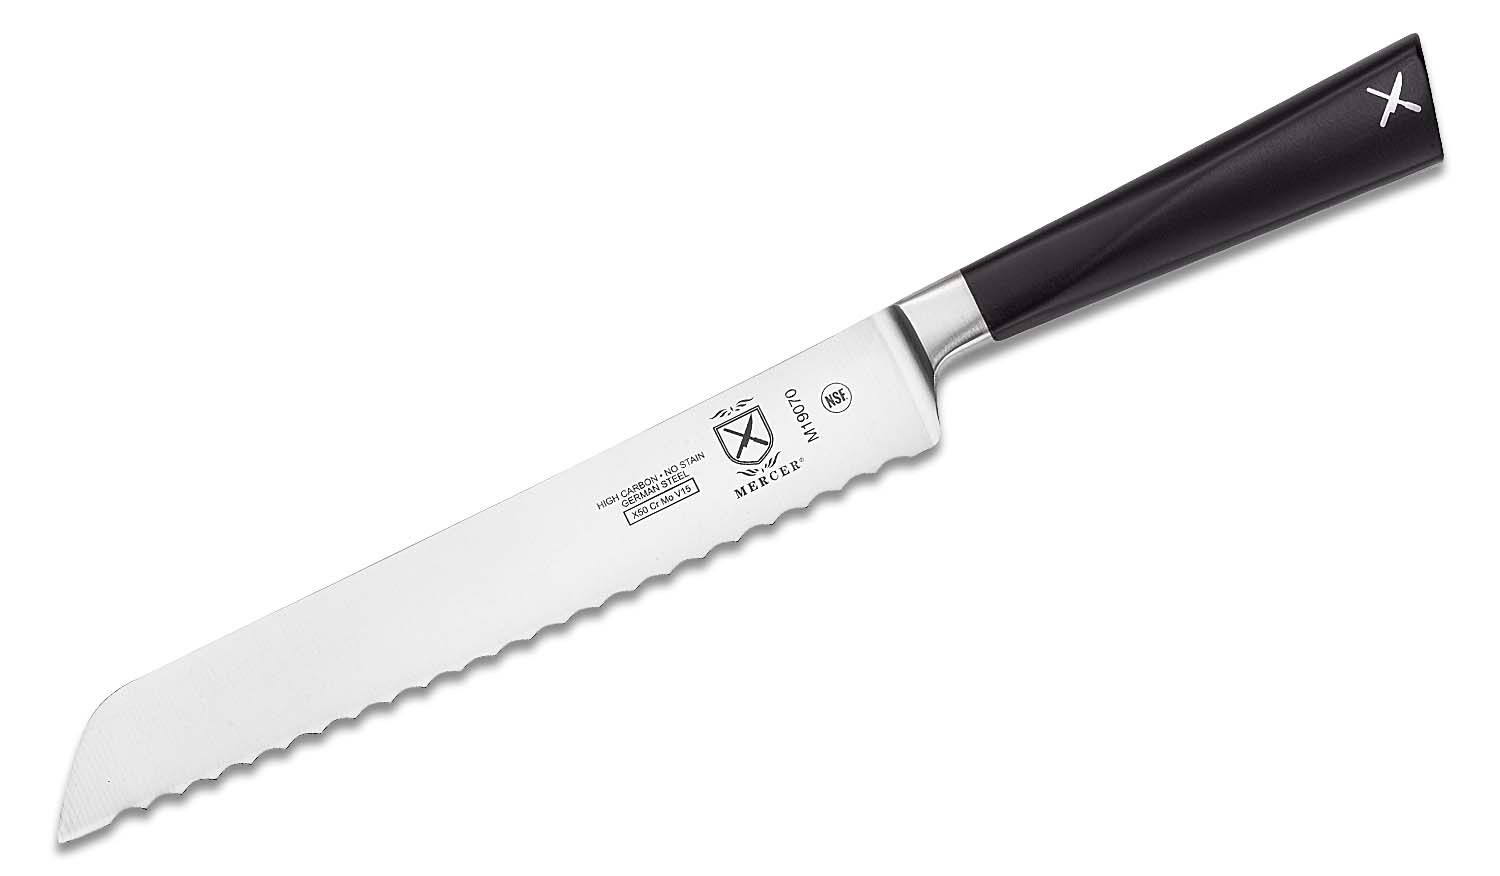 Forschner Bread Knife, 10.25 in. Wavy Egde Blade